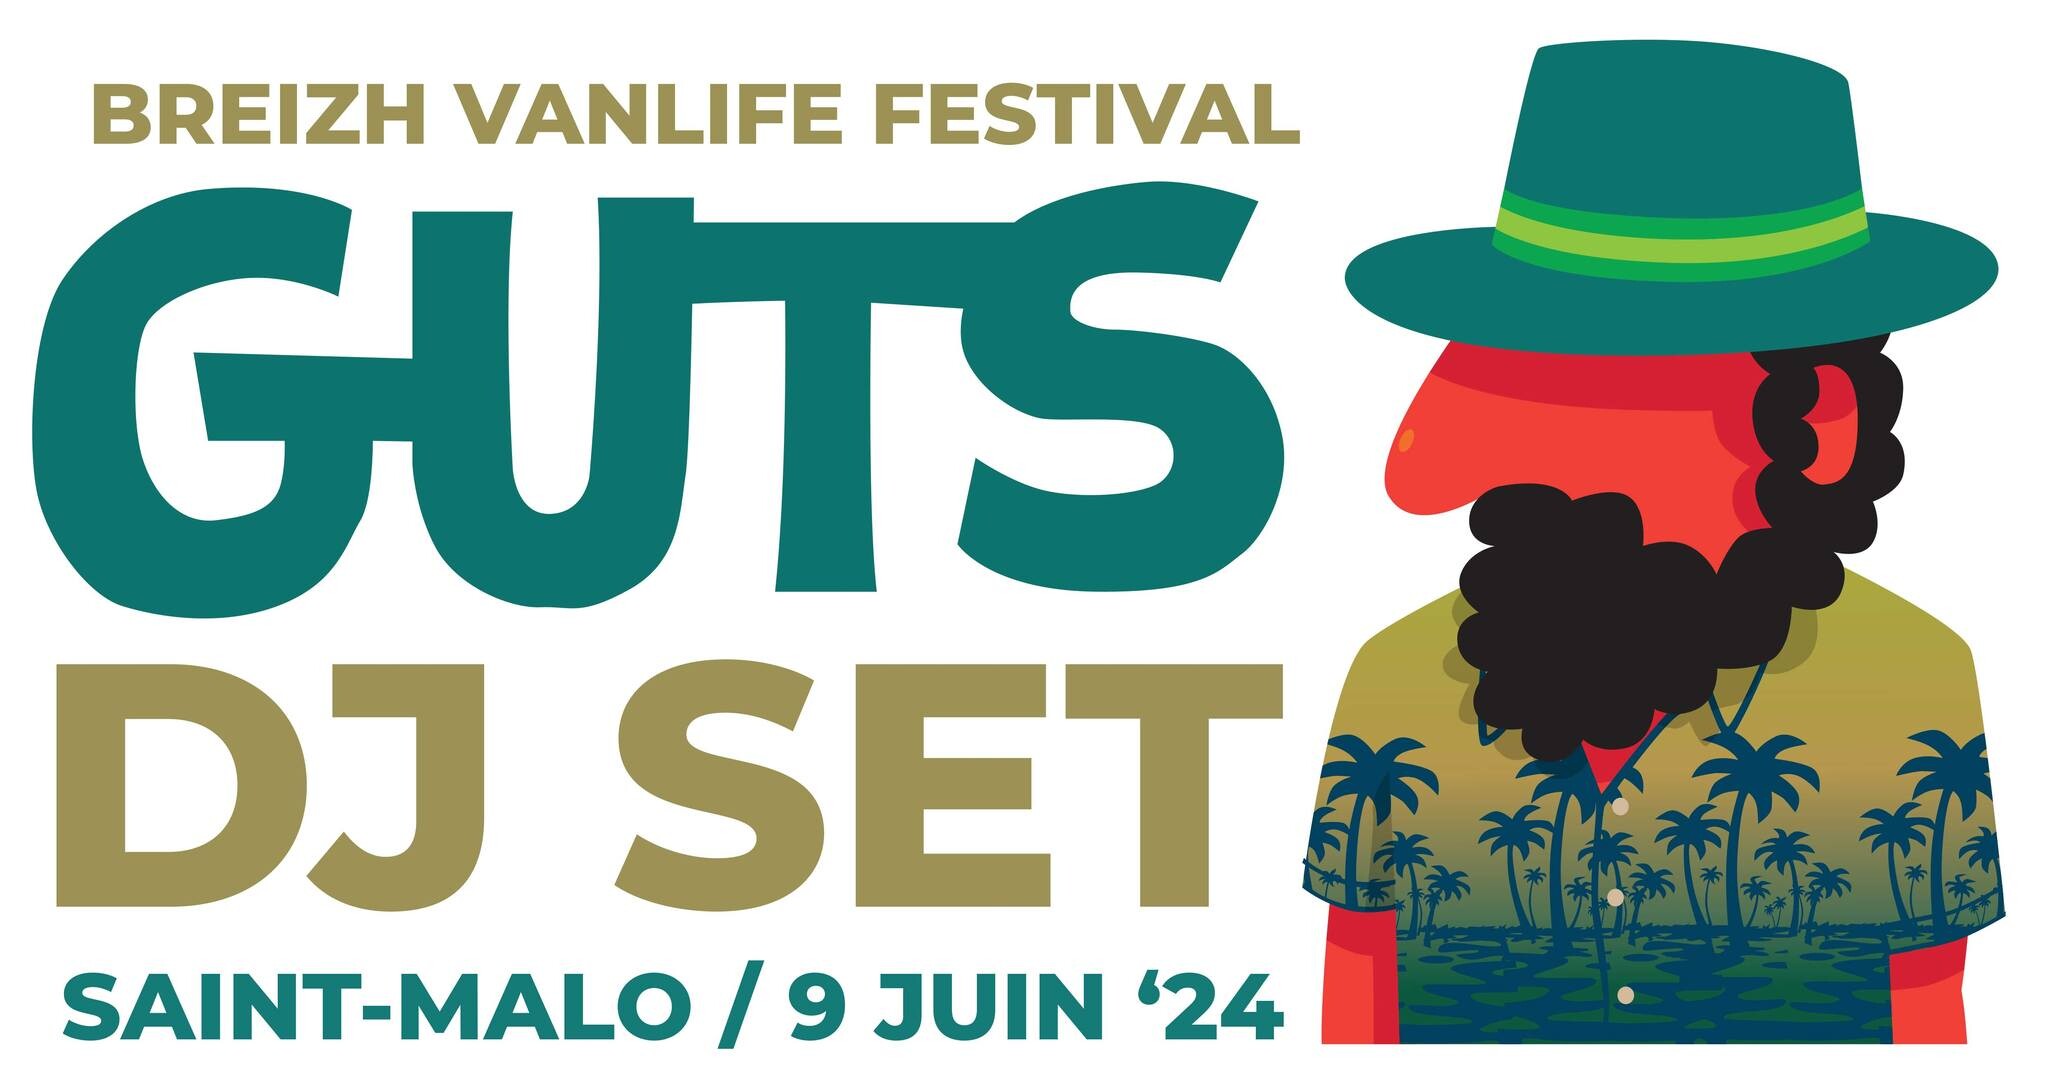 Guts - Breizh Vanlife Festival #3